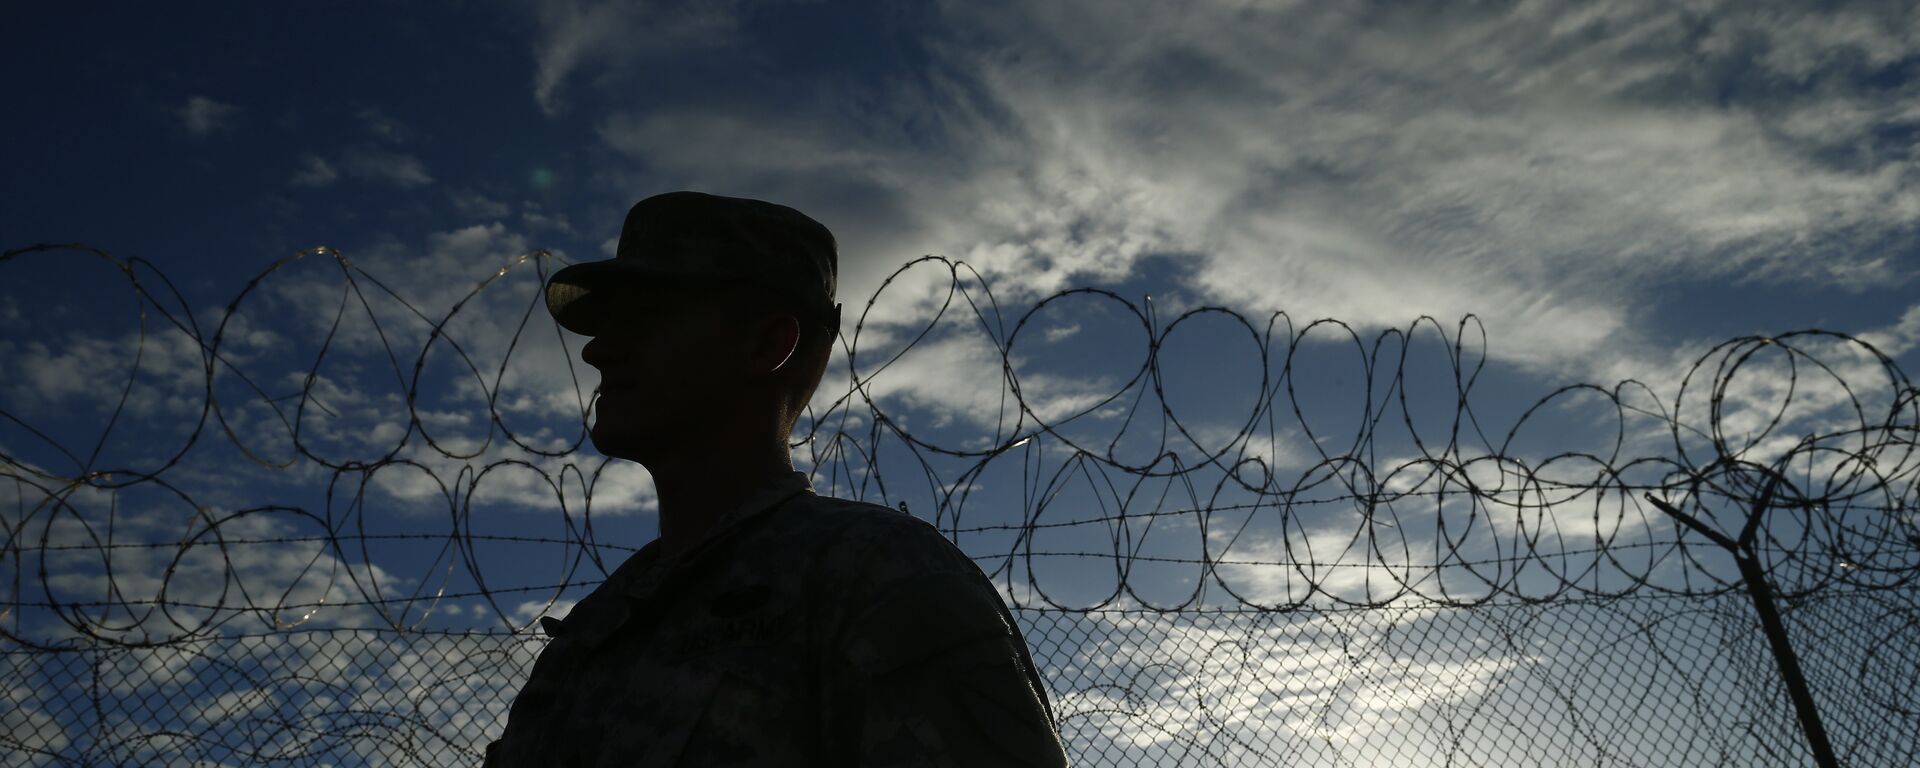 Soldado estadounidense en Guantánamo - Sputnik Mundo, 1920, 09.09.2021